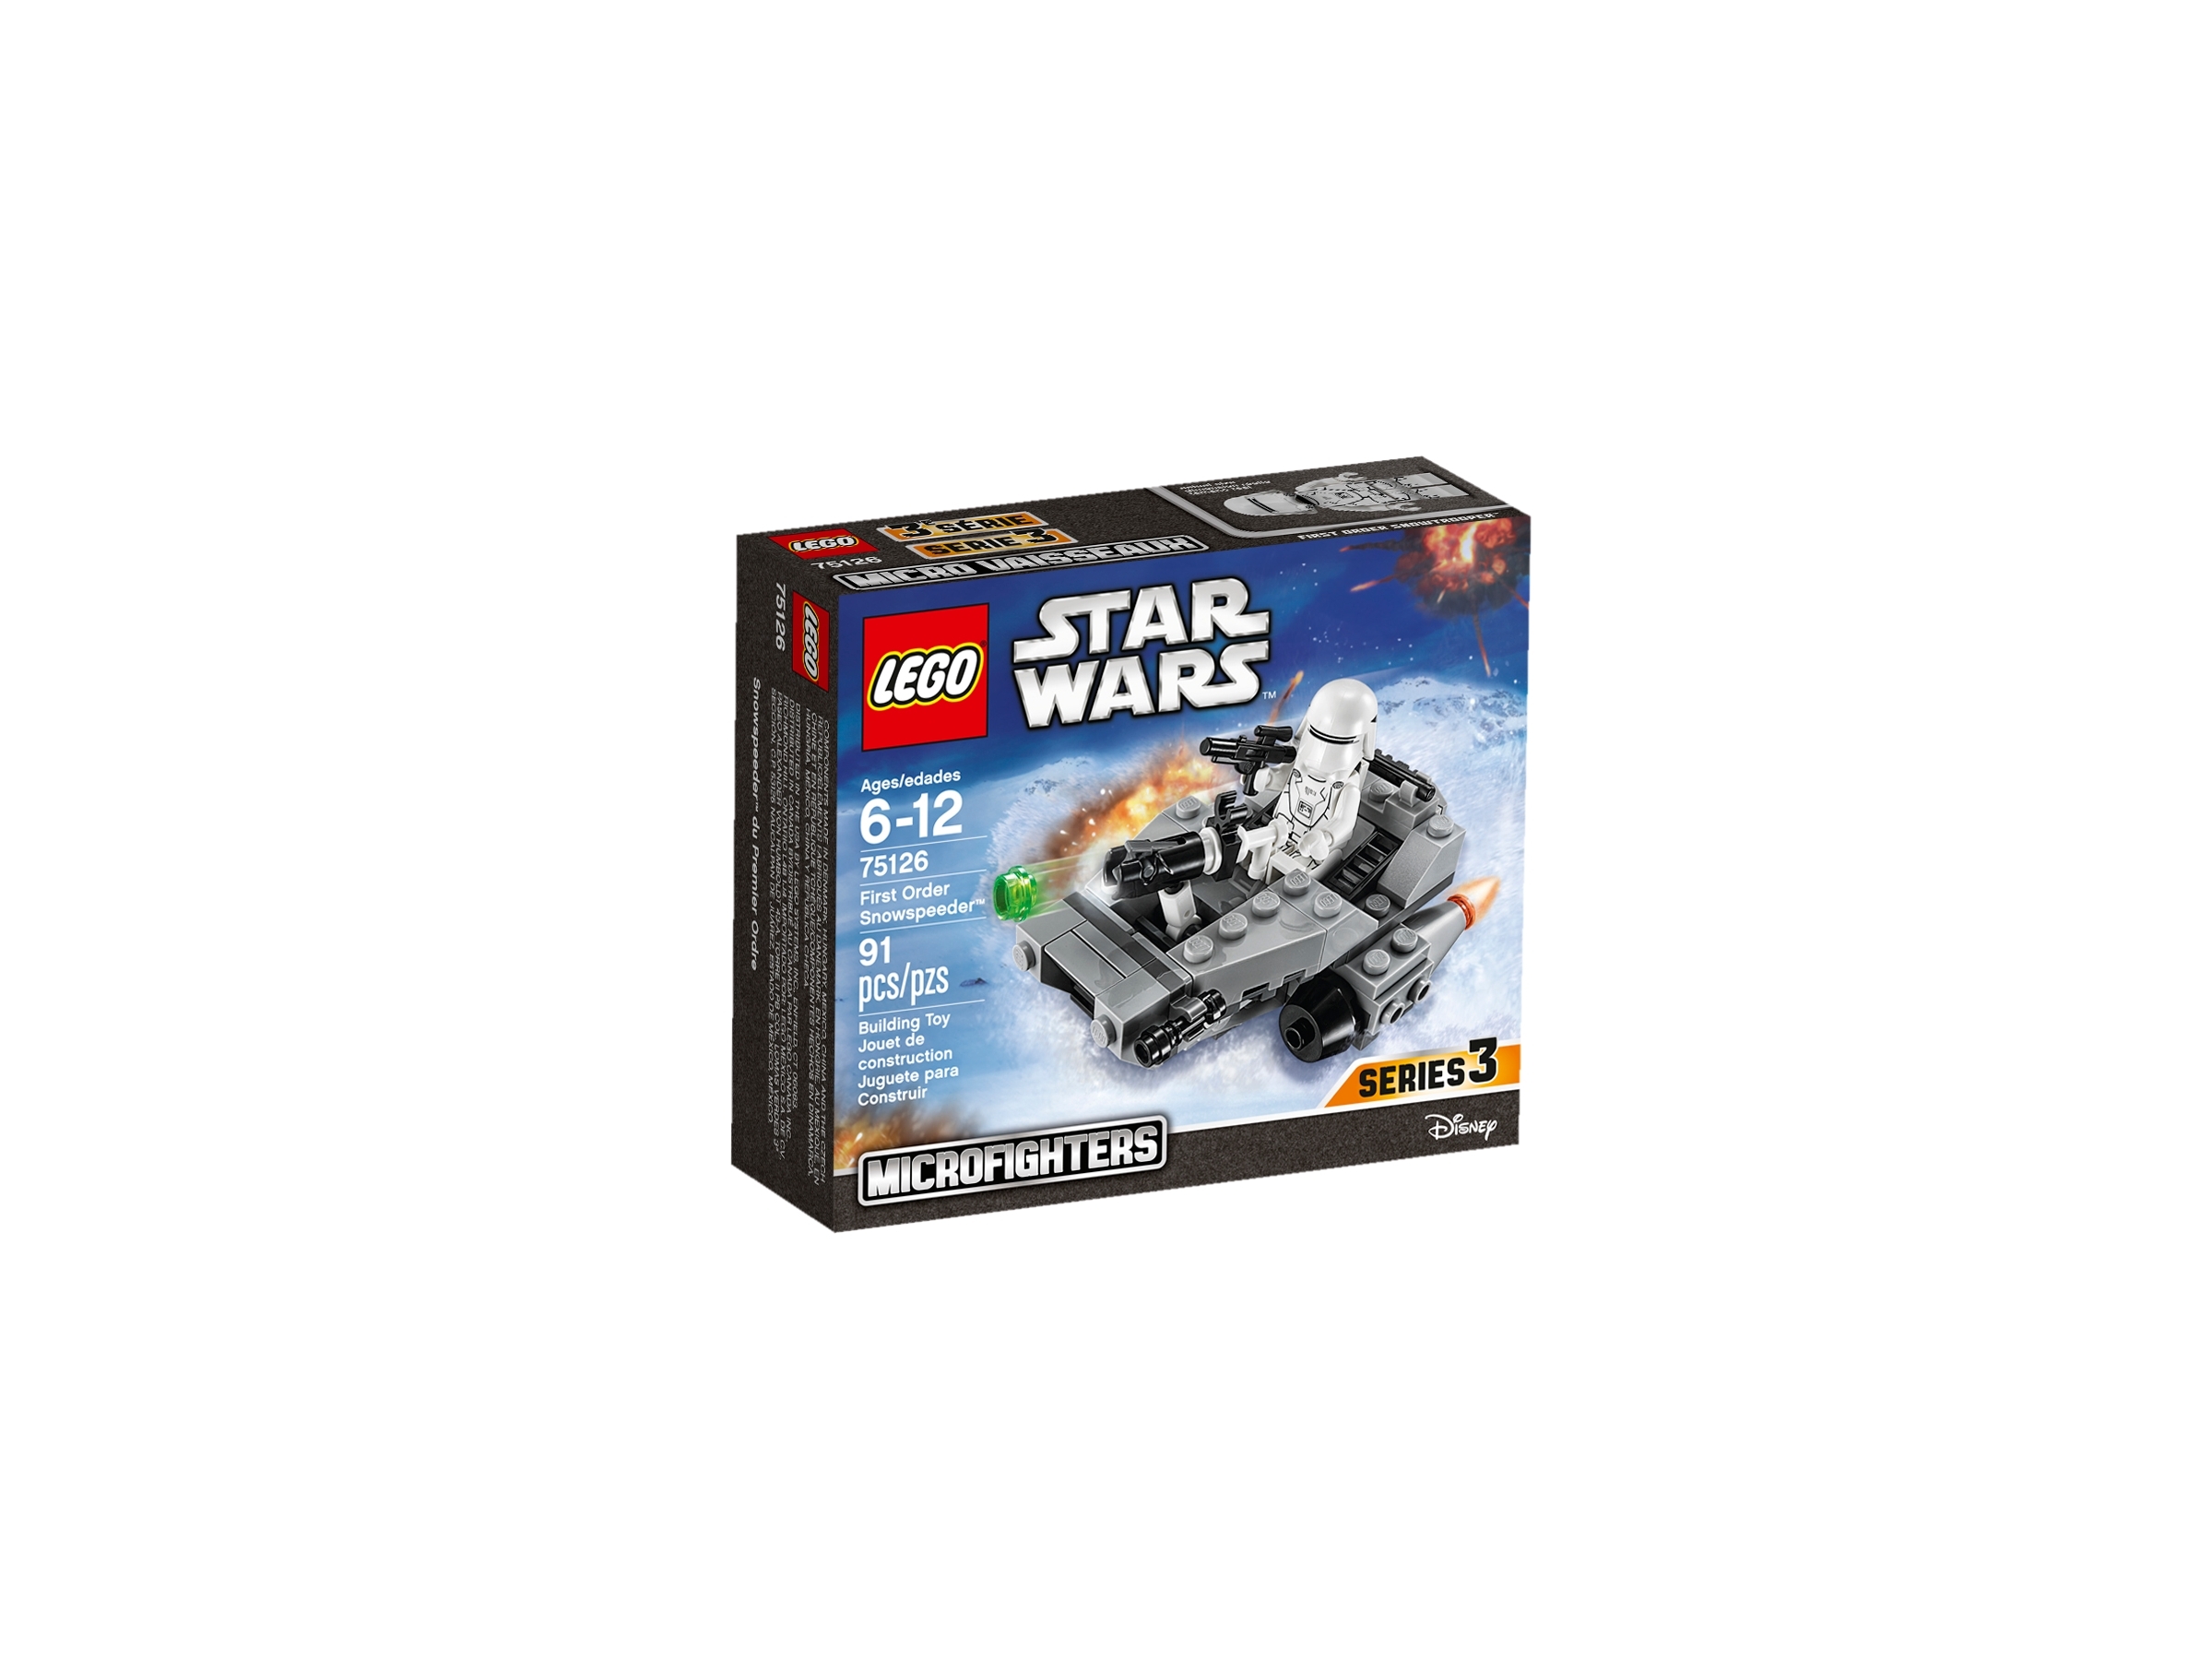 aus Set 75126 #1212 sw0701 First Order Snowtrooper Lego Star Wars 